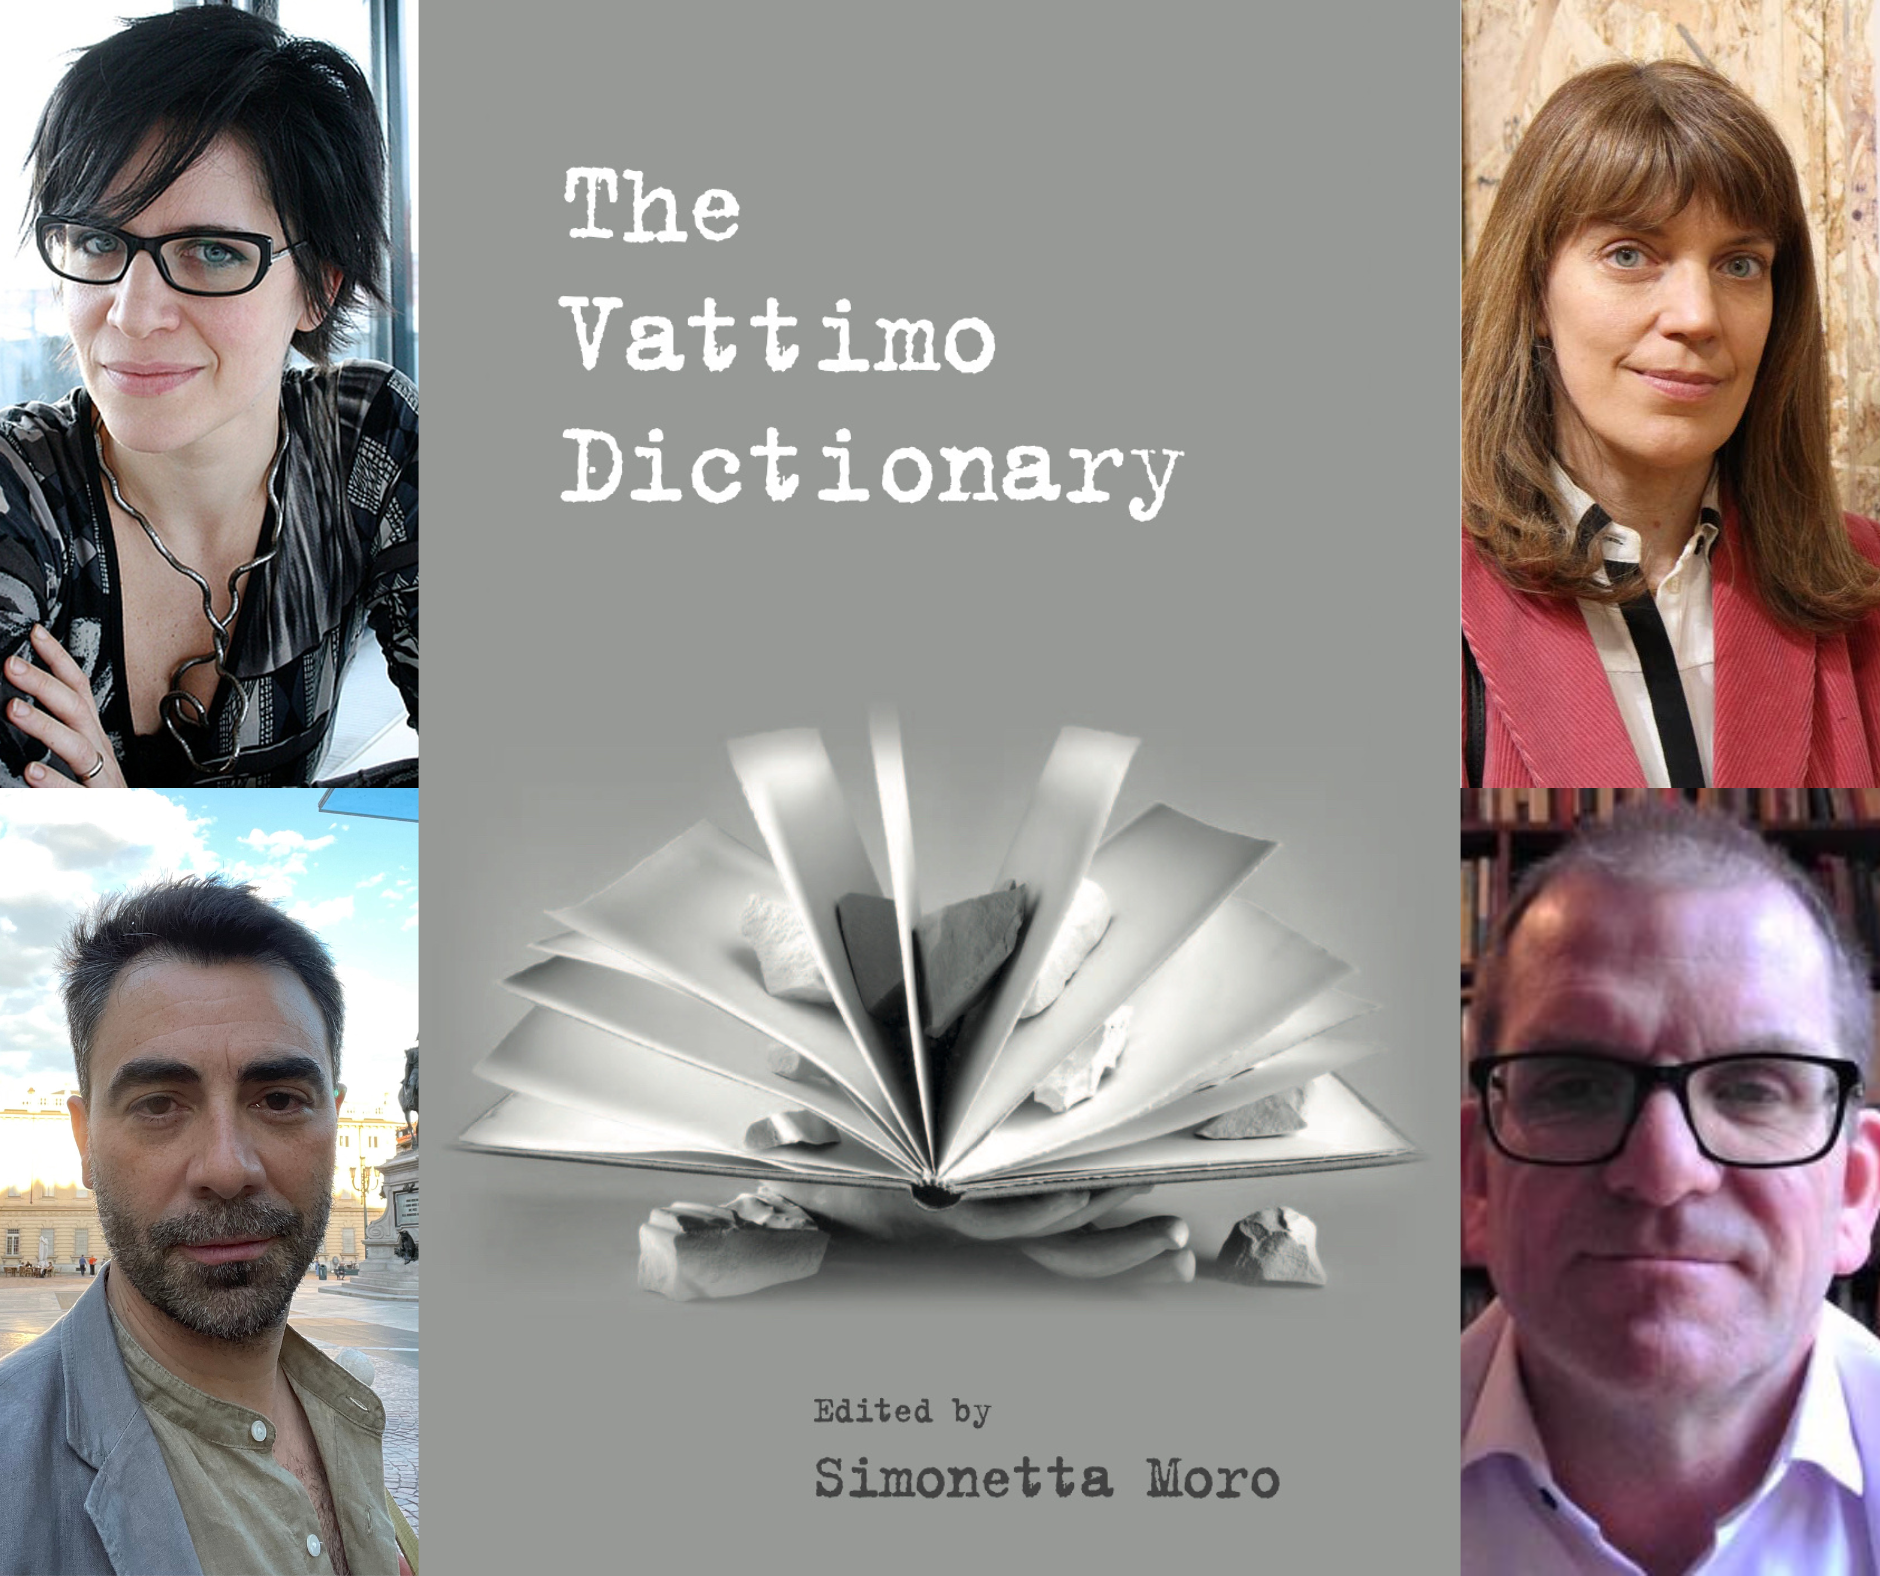 The Vattimo Dictionary online book launch at IDSVA with Simonetta Moro, Silvia Mazzini, David Webb, and Santiago Zabala